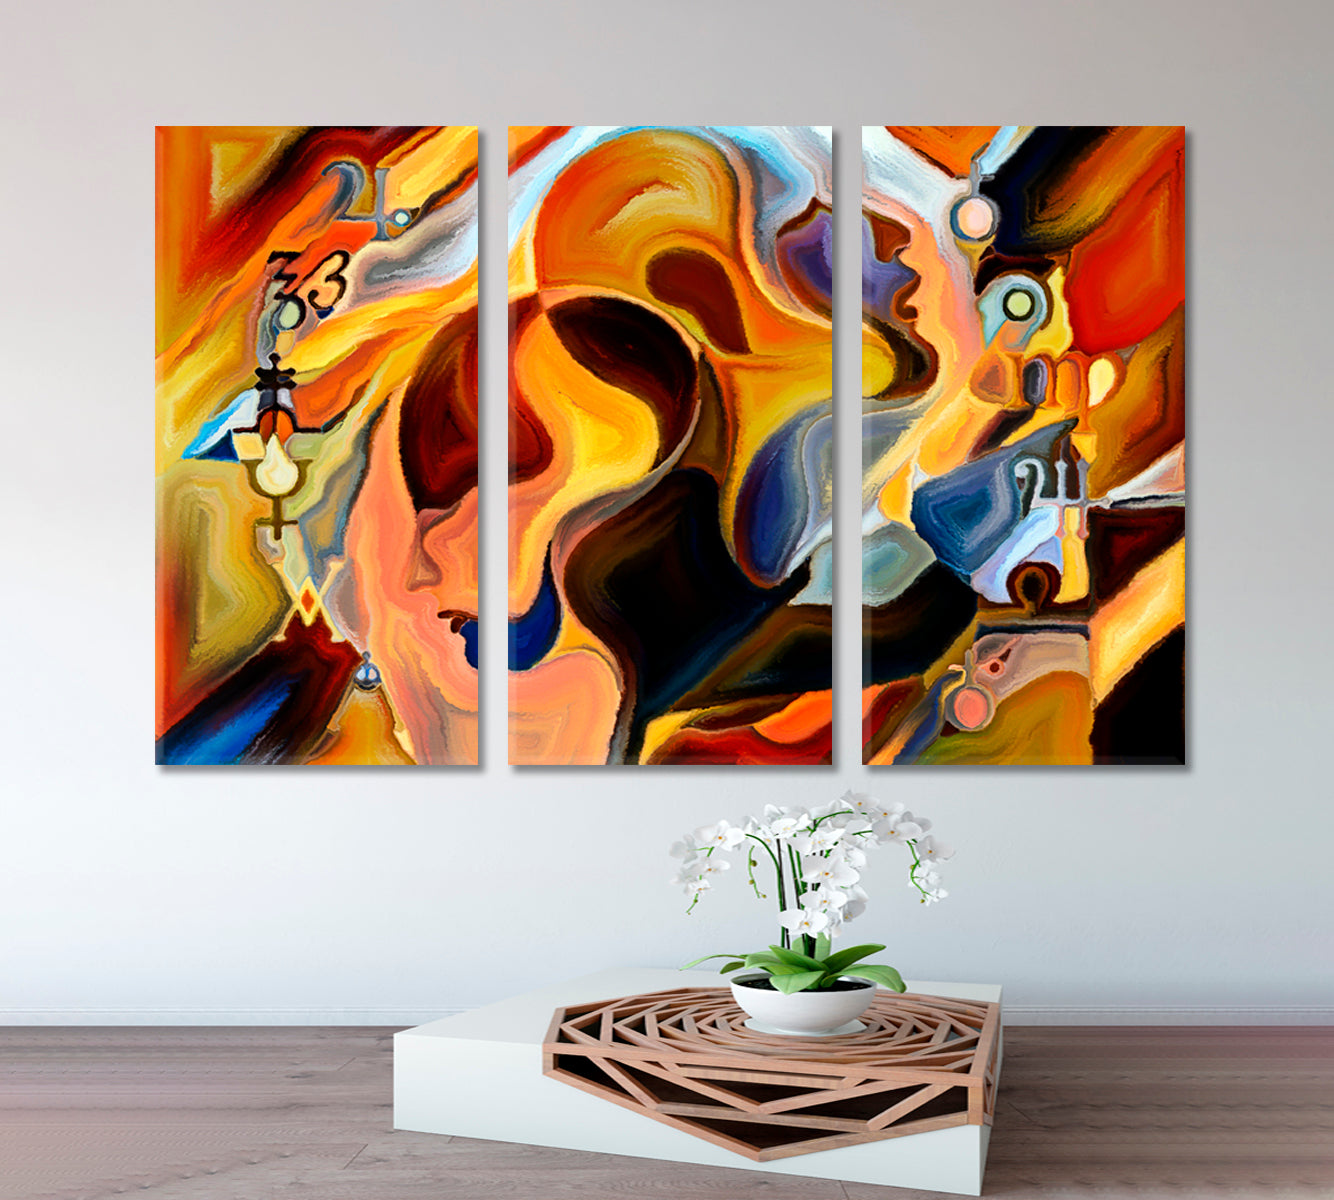 SACRED SYMBOLS Human and Magical Abstract Shapes Abstract Art Print Artesty 3 panels 36" x 24" 